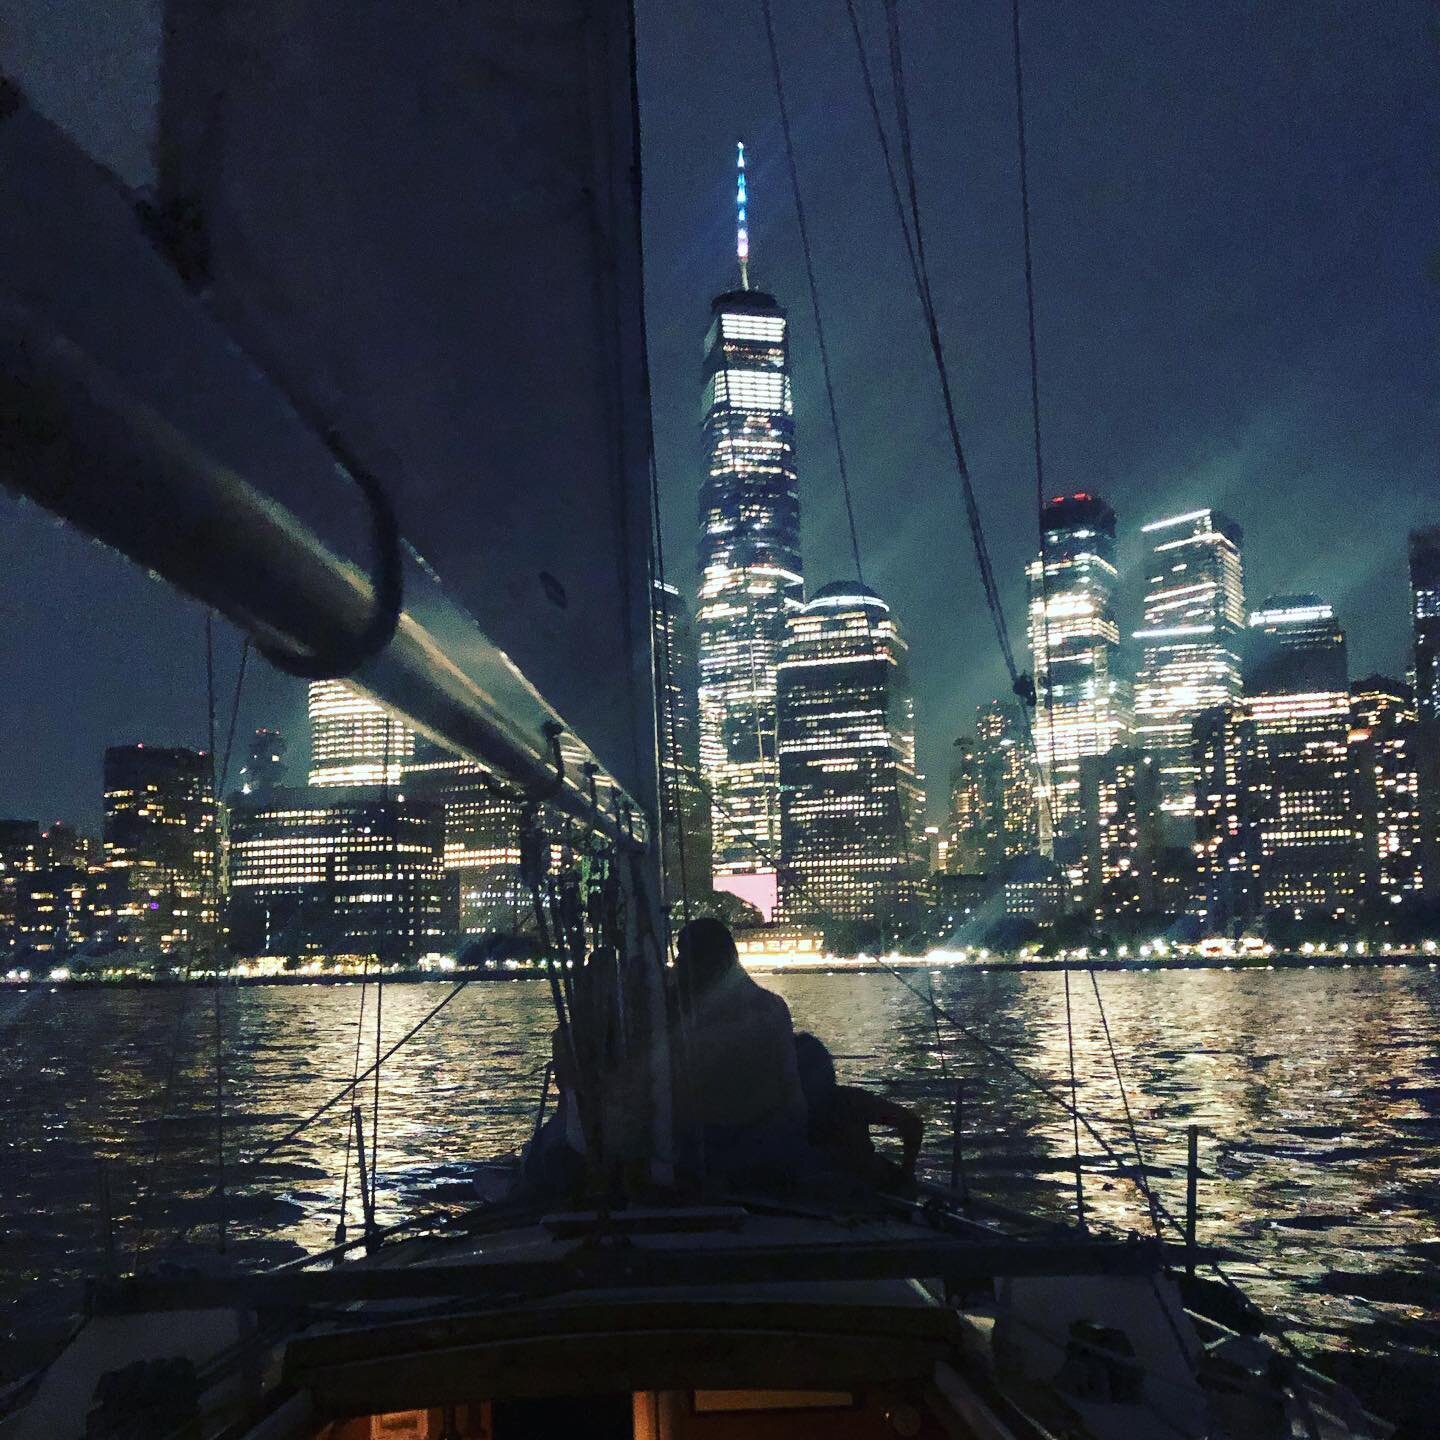 ⛵️✨🌃

Sunset / City Lights Sails daily 7:30-10:00pm (six max)
.
.
.
.
. 
#BrooklynSail #BKsail #SailingNYC #NYCSailing #SailboatNYC #NYCSailboat #PrivateSailNYC #NYCPrivateSail #SailingNewYorkCity #NewYorkCitySailing #SailboatNewYorkCity #NewYorkCit